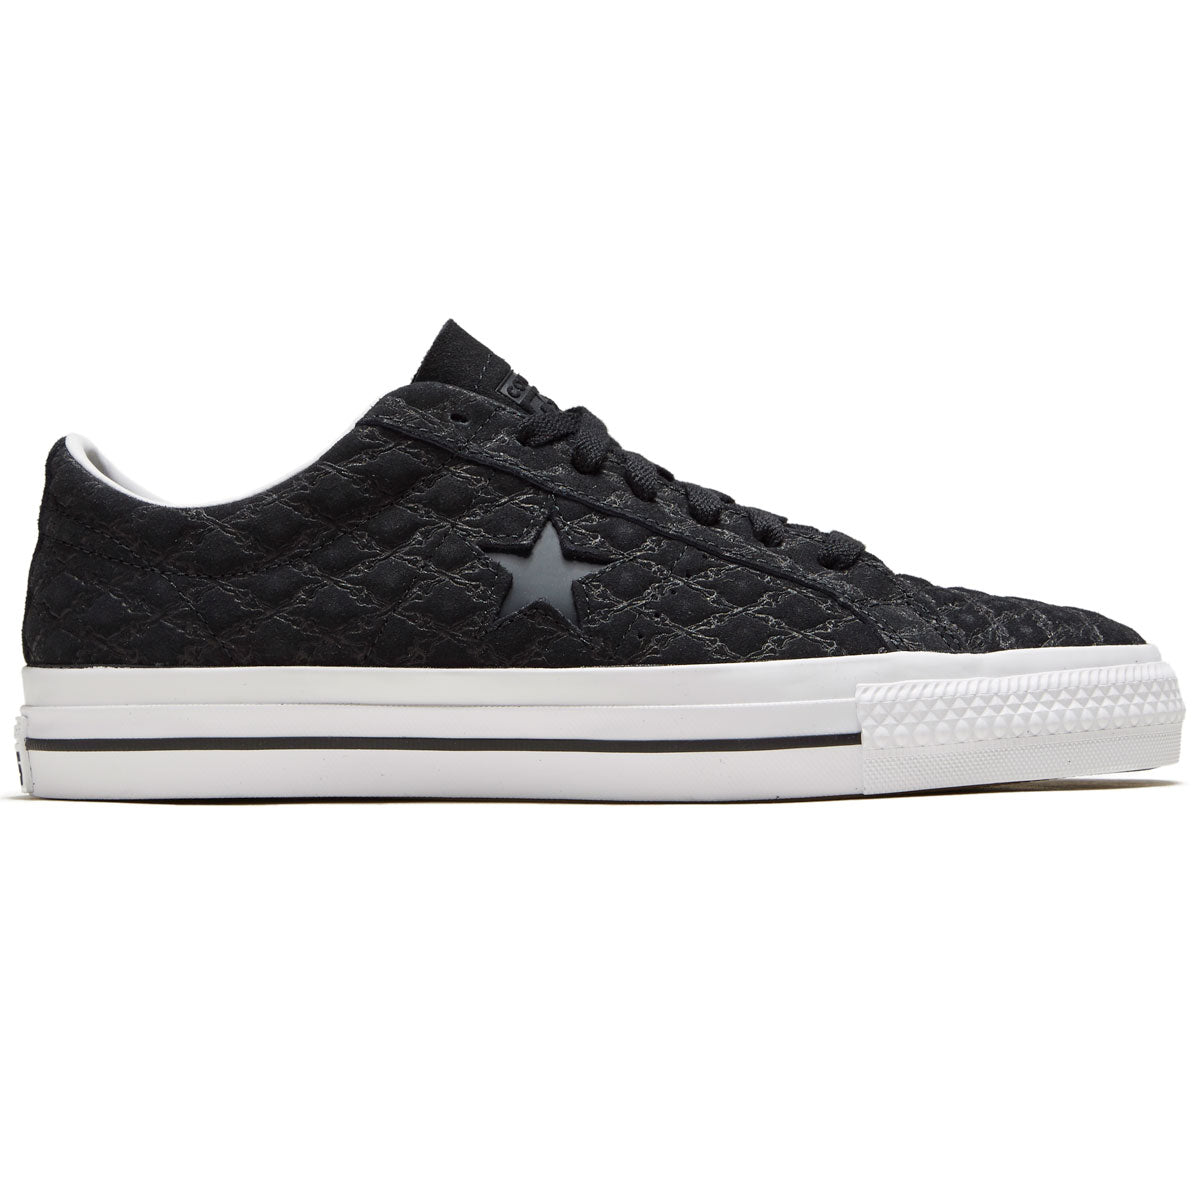 Converse One Star Pro Shoes - Black/Black/White image 1